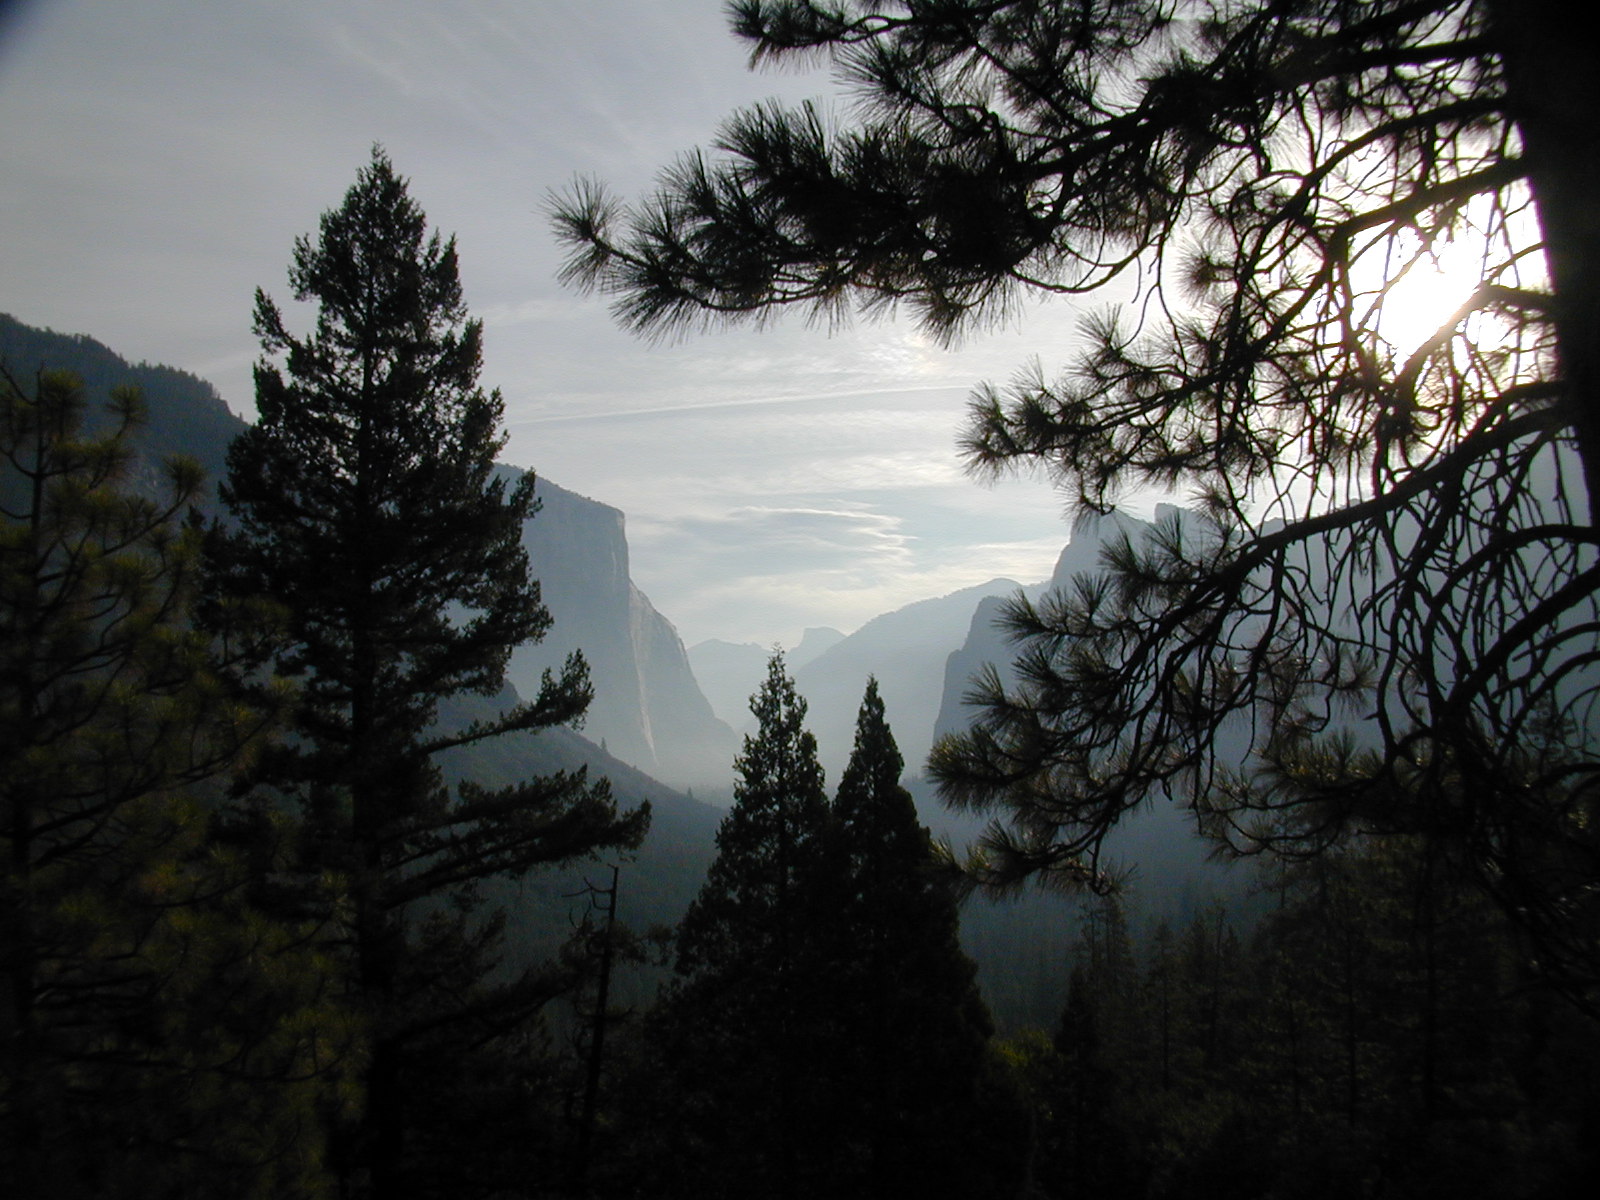 Yosemite National Park ©2015 by Ken Gilliland